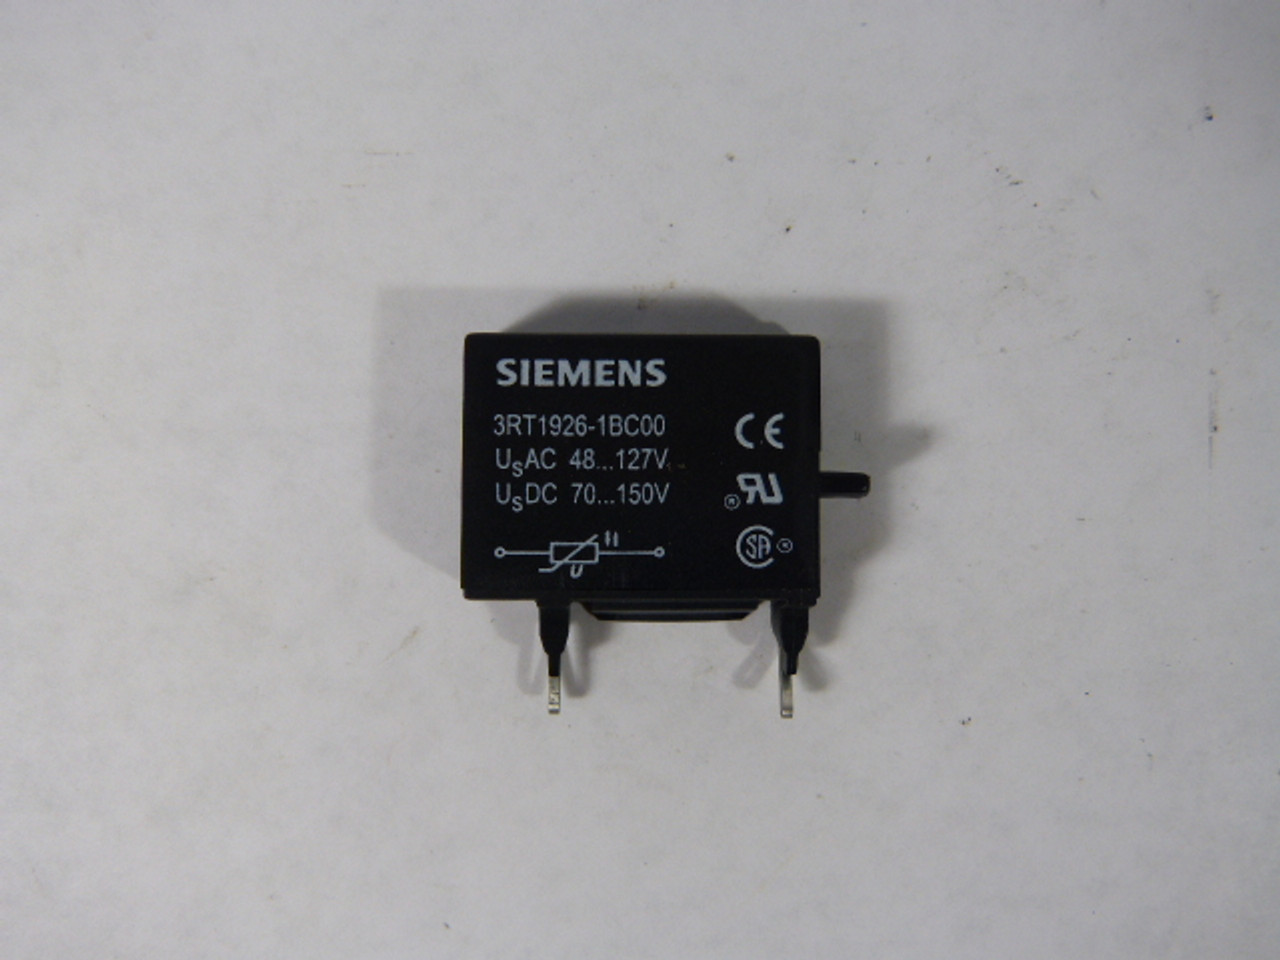 Siemens 3RT1926-1BC00 Surge Suppressor 48-127V USED